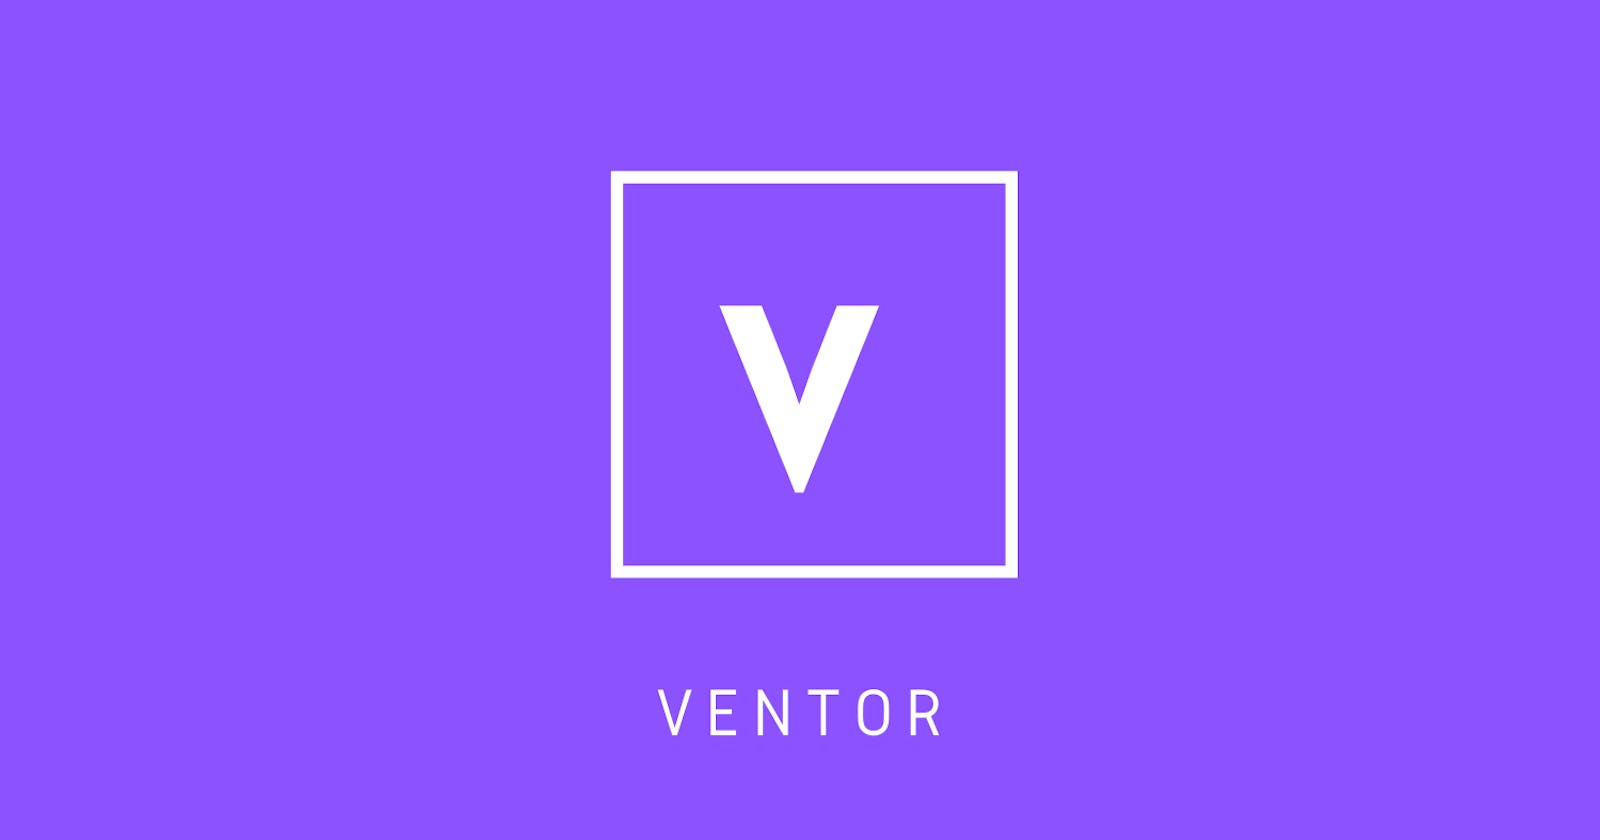 How we built Ventor using HarperDB, Flutter, and Python